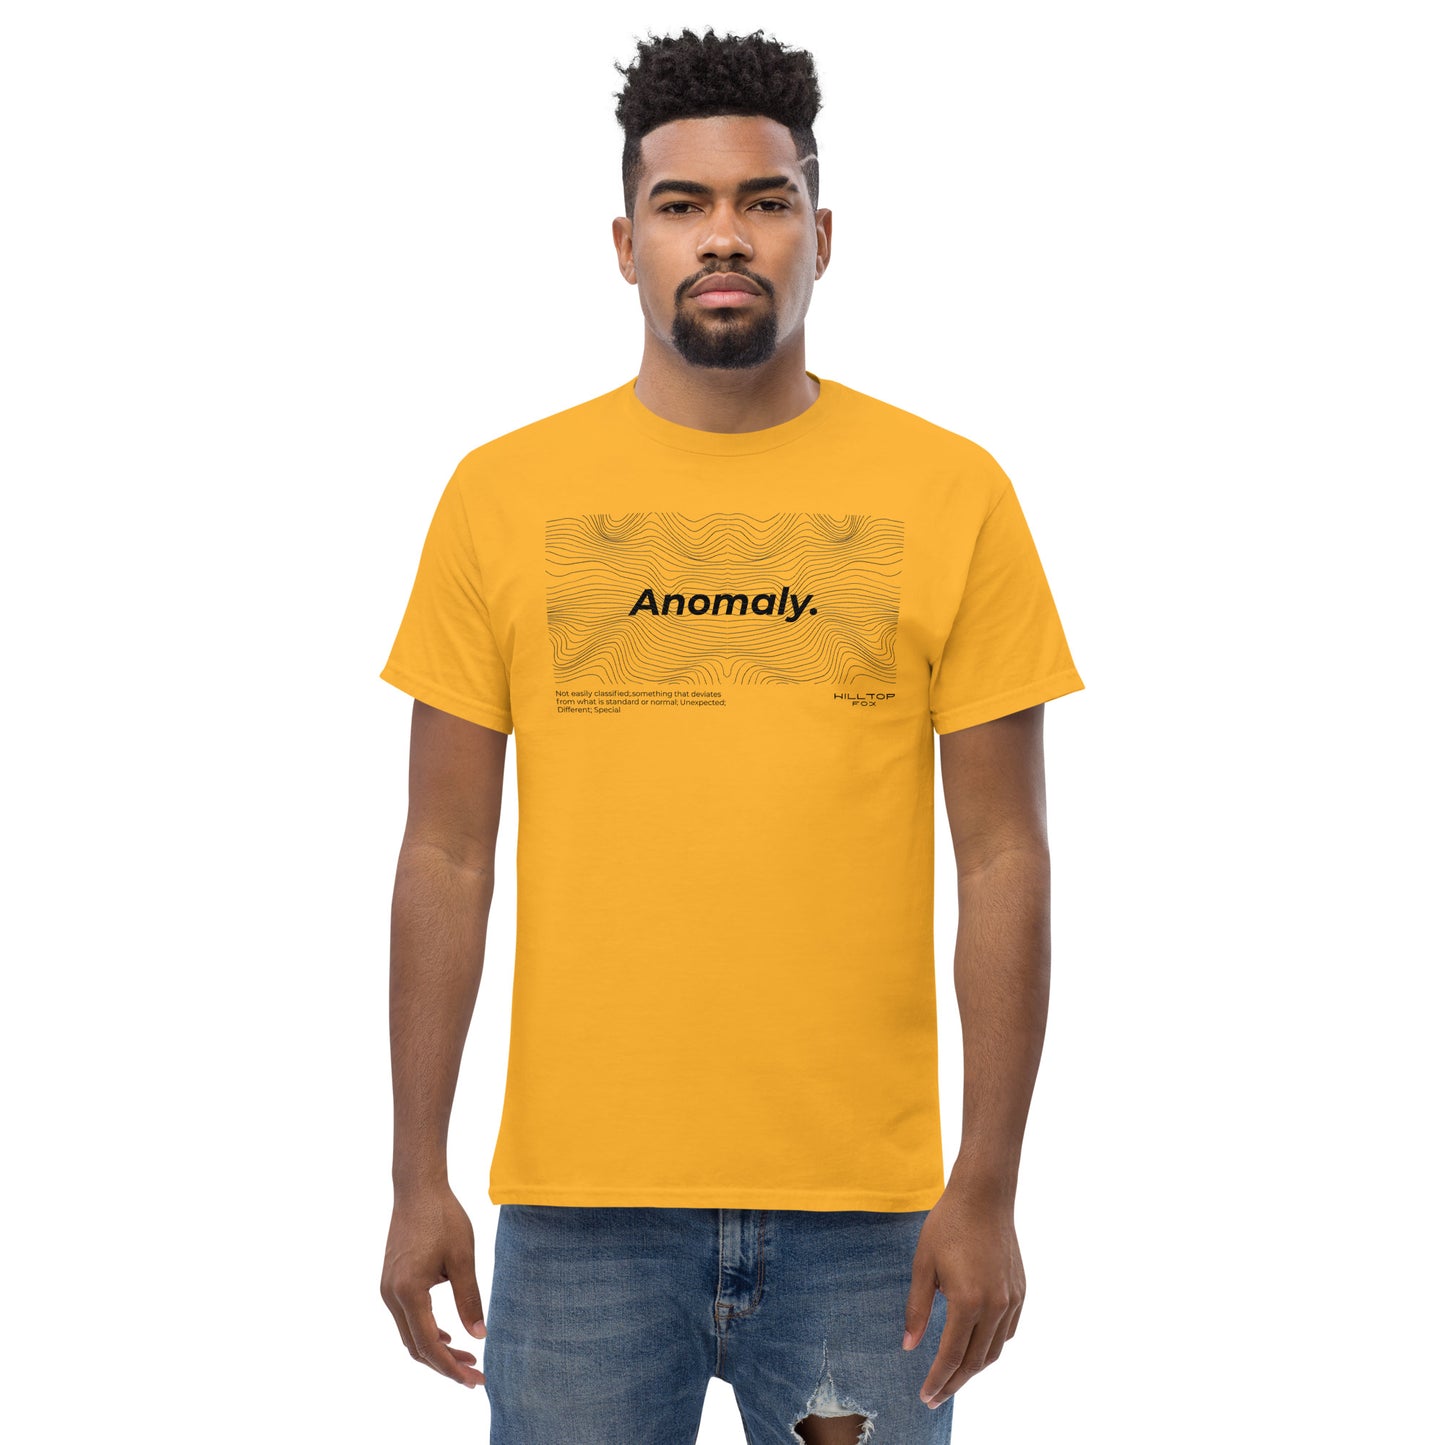 T-shirt d'anomalie